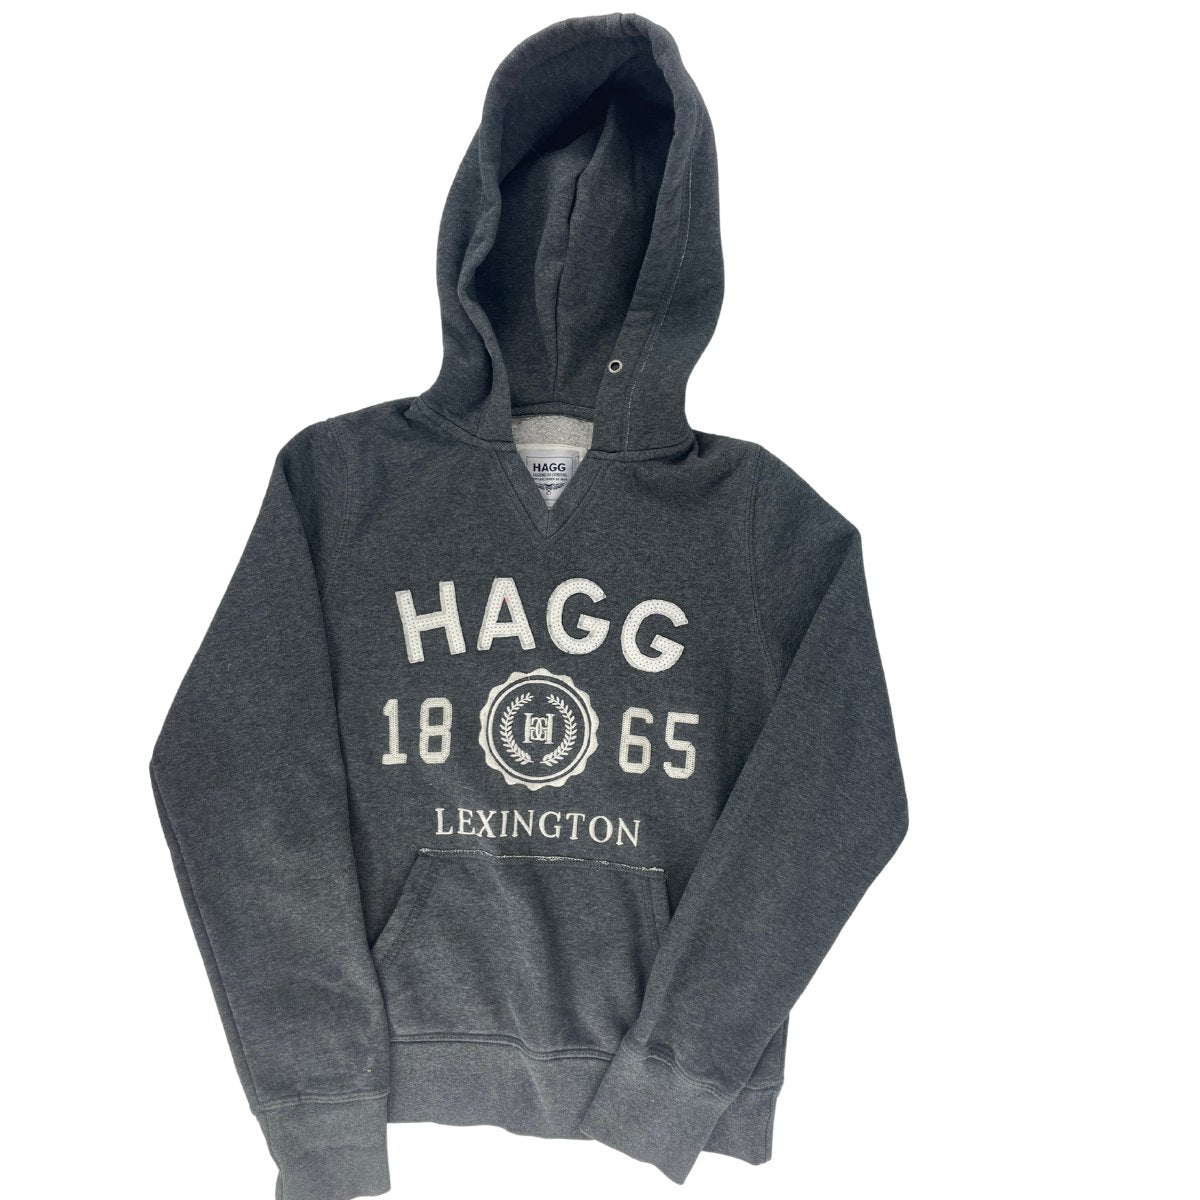 Sweat gris - Hagg - Osmoz sellerie - HAGG